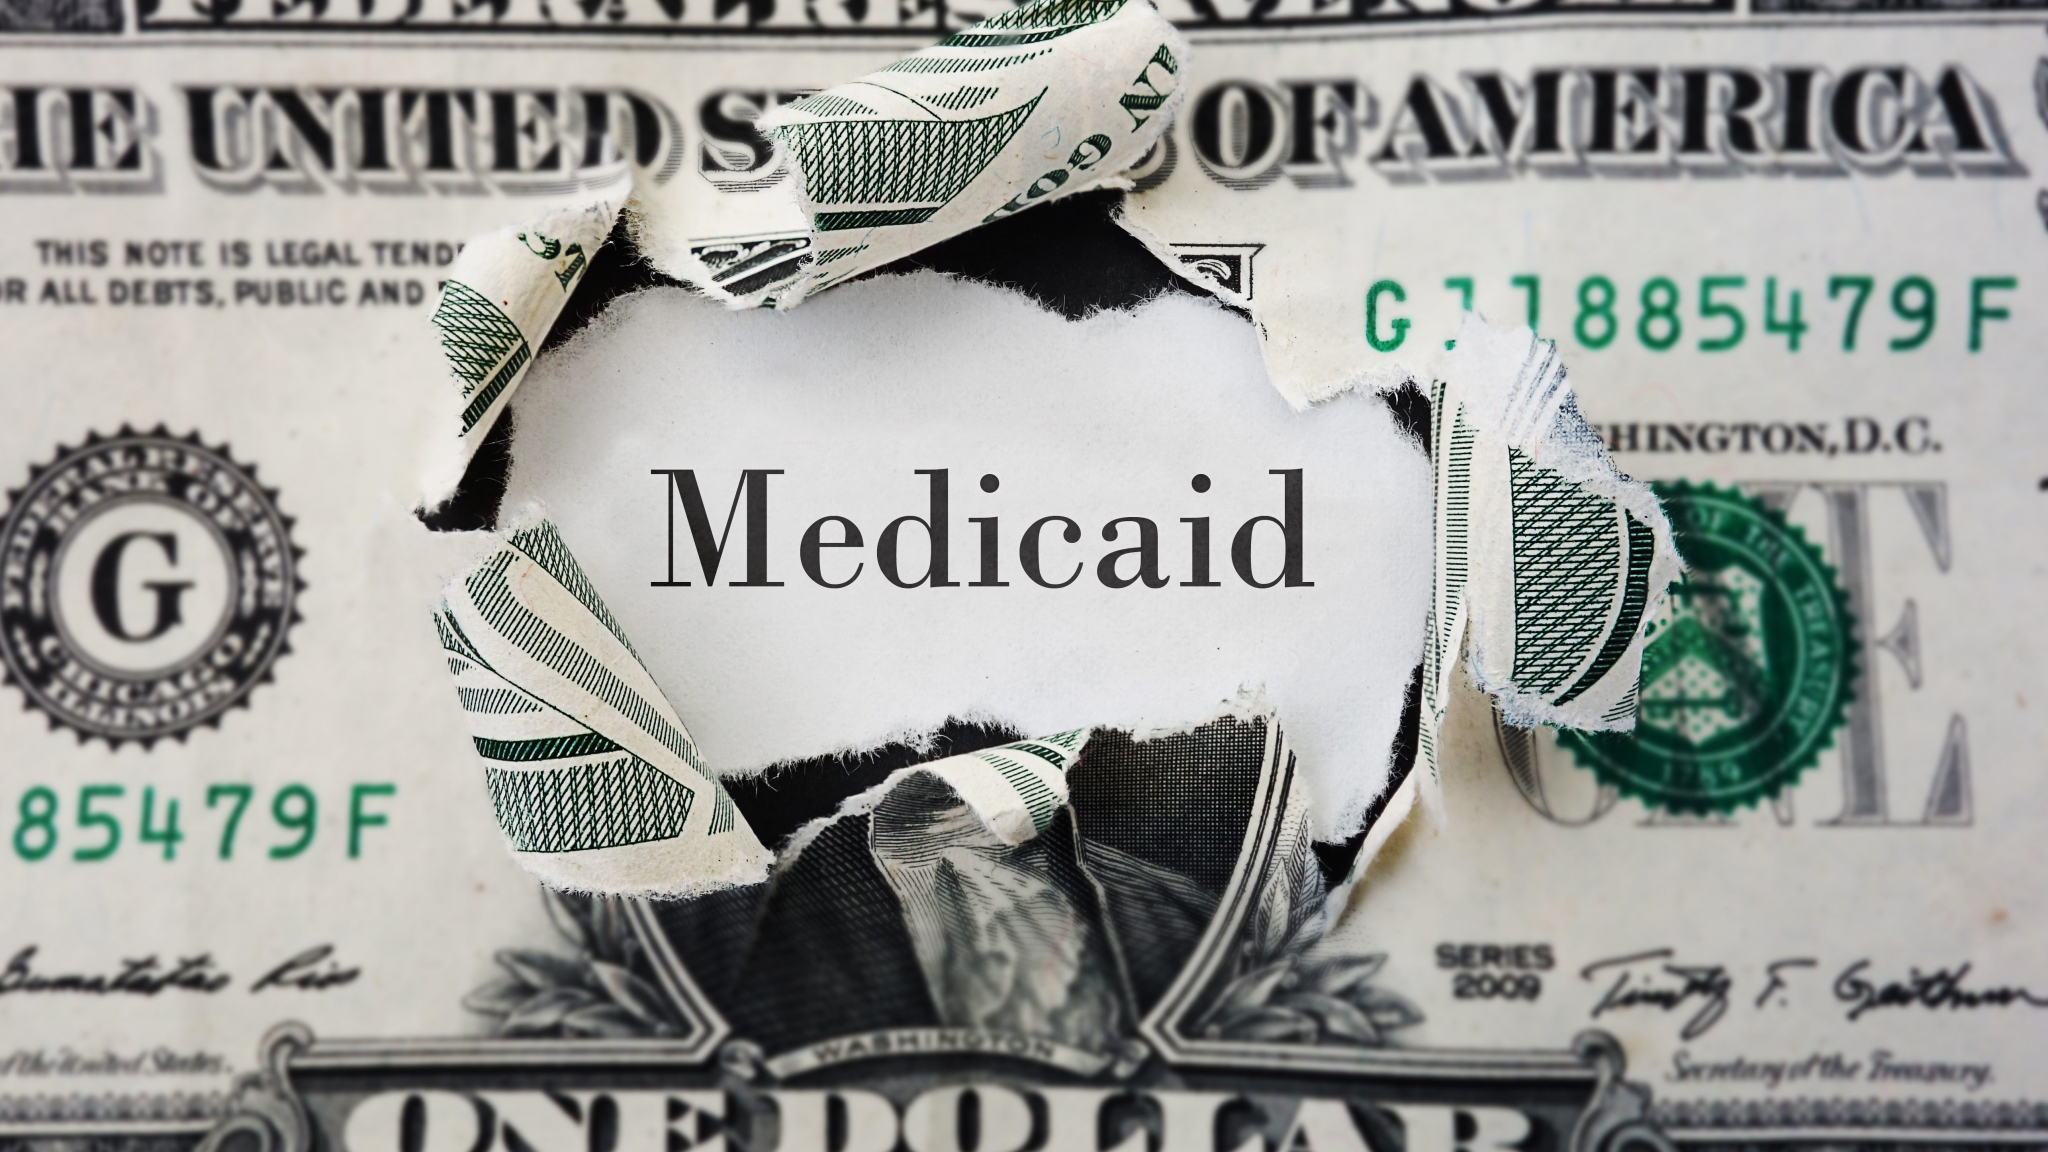 Medicaid Coverage